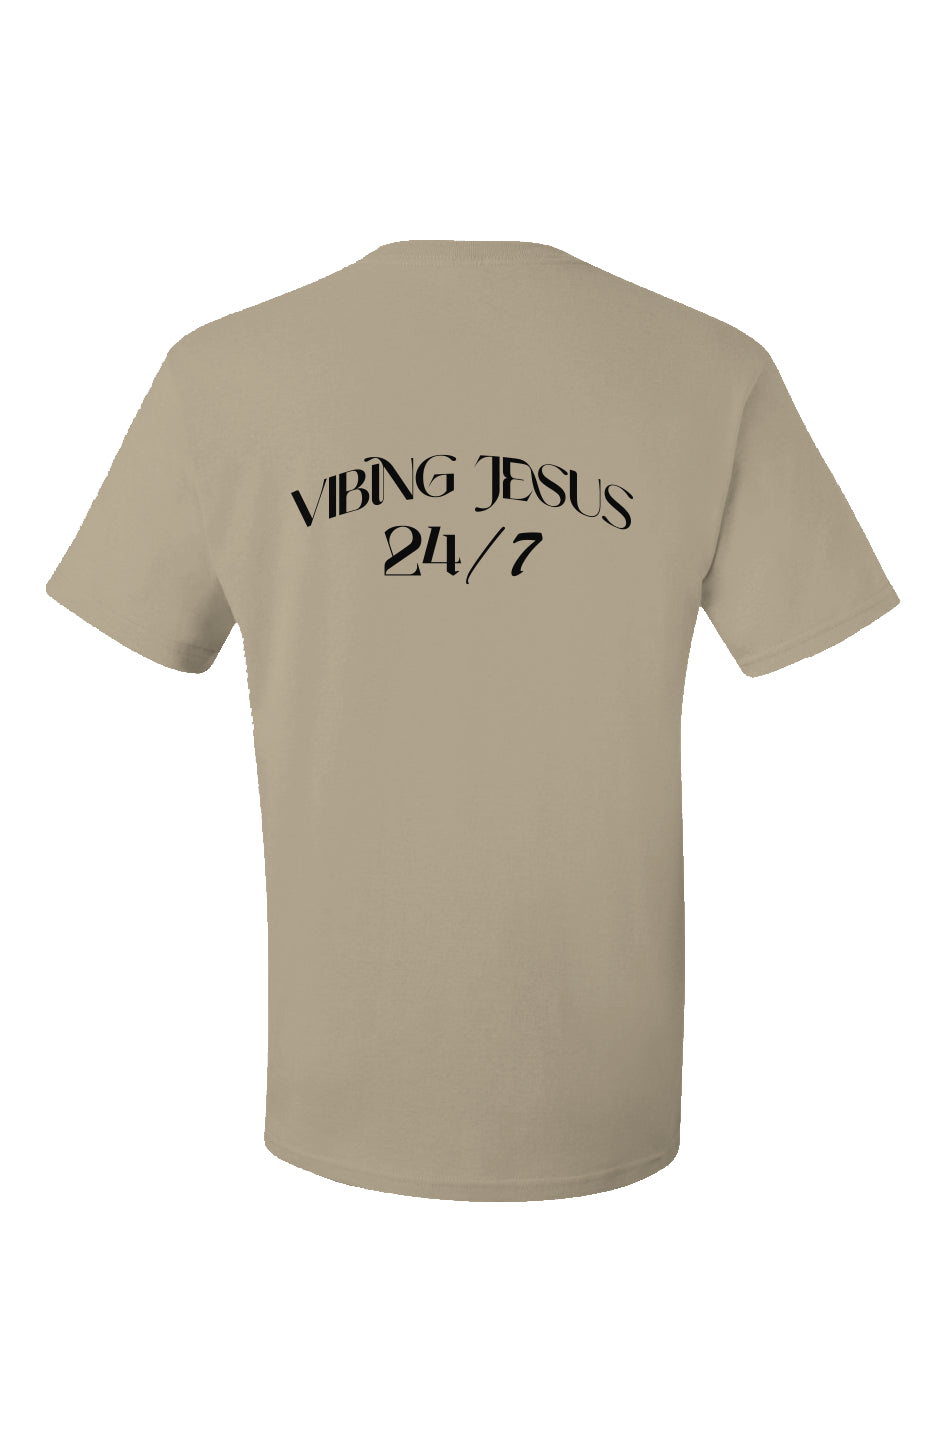 Jesus Vibes Dri-Power T-Shirt